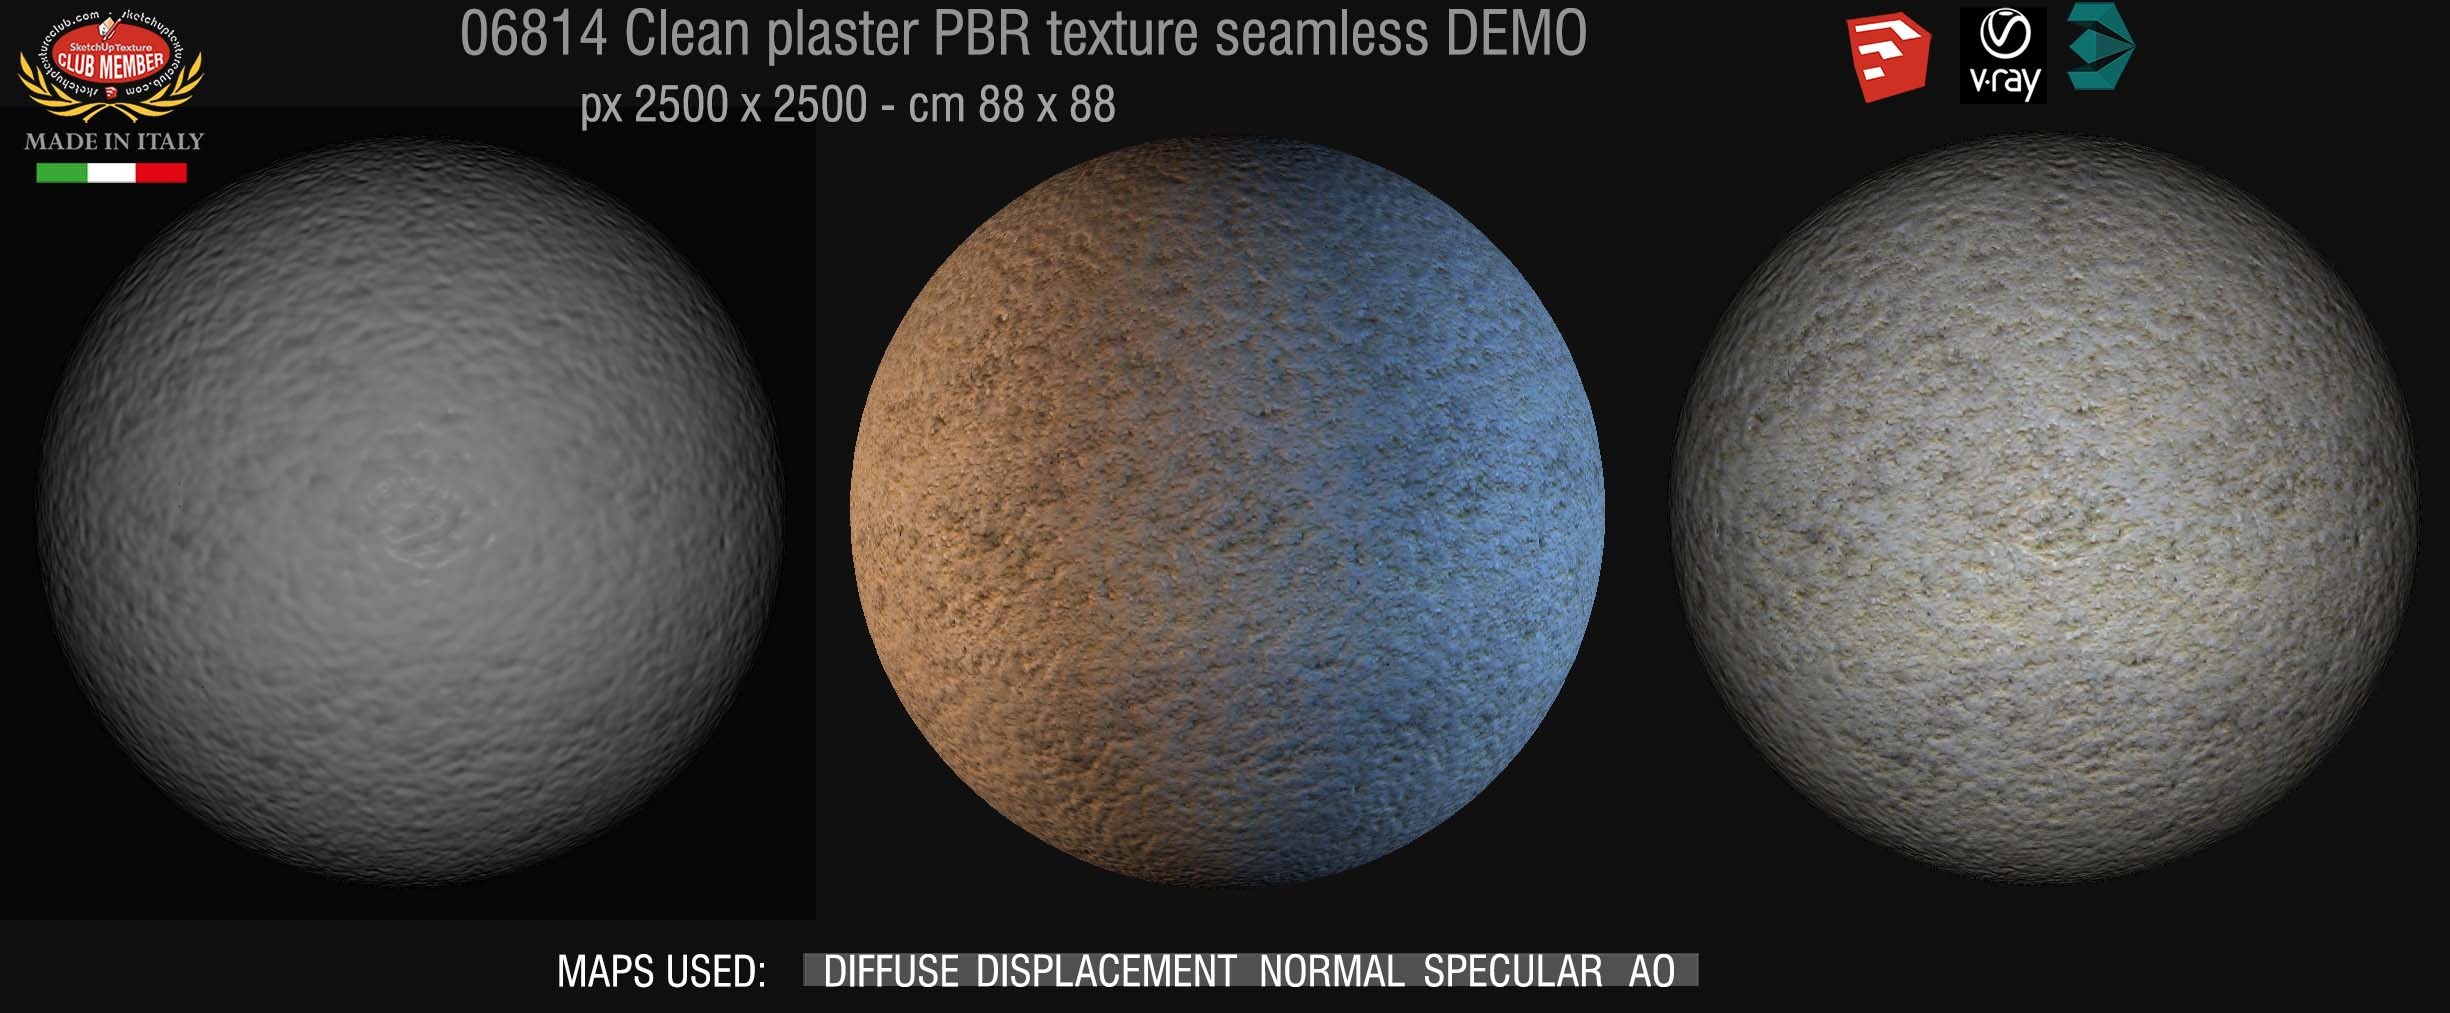 06814 clean plaster PBR texture seamless DEMO